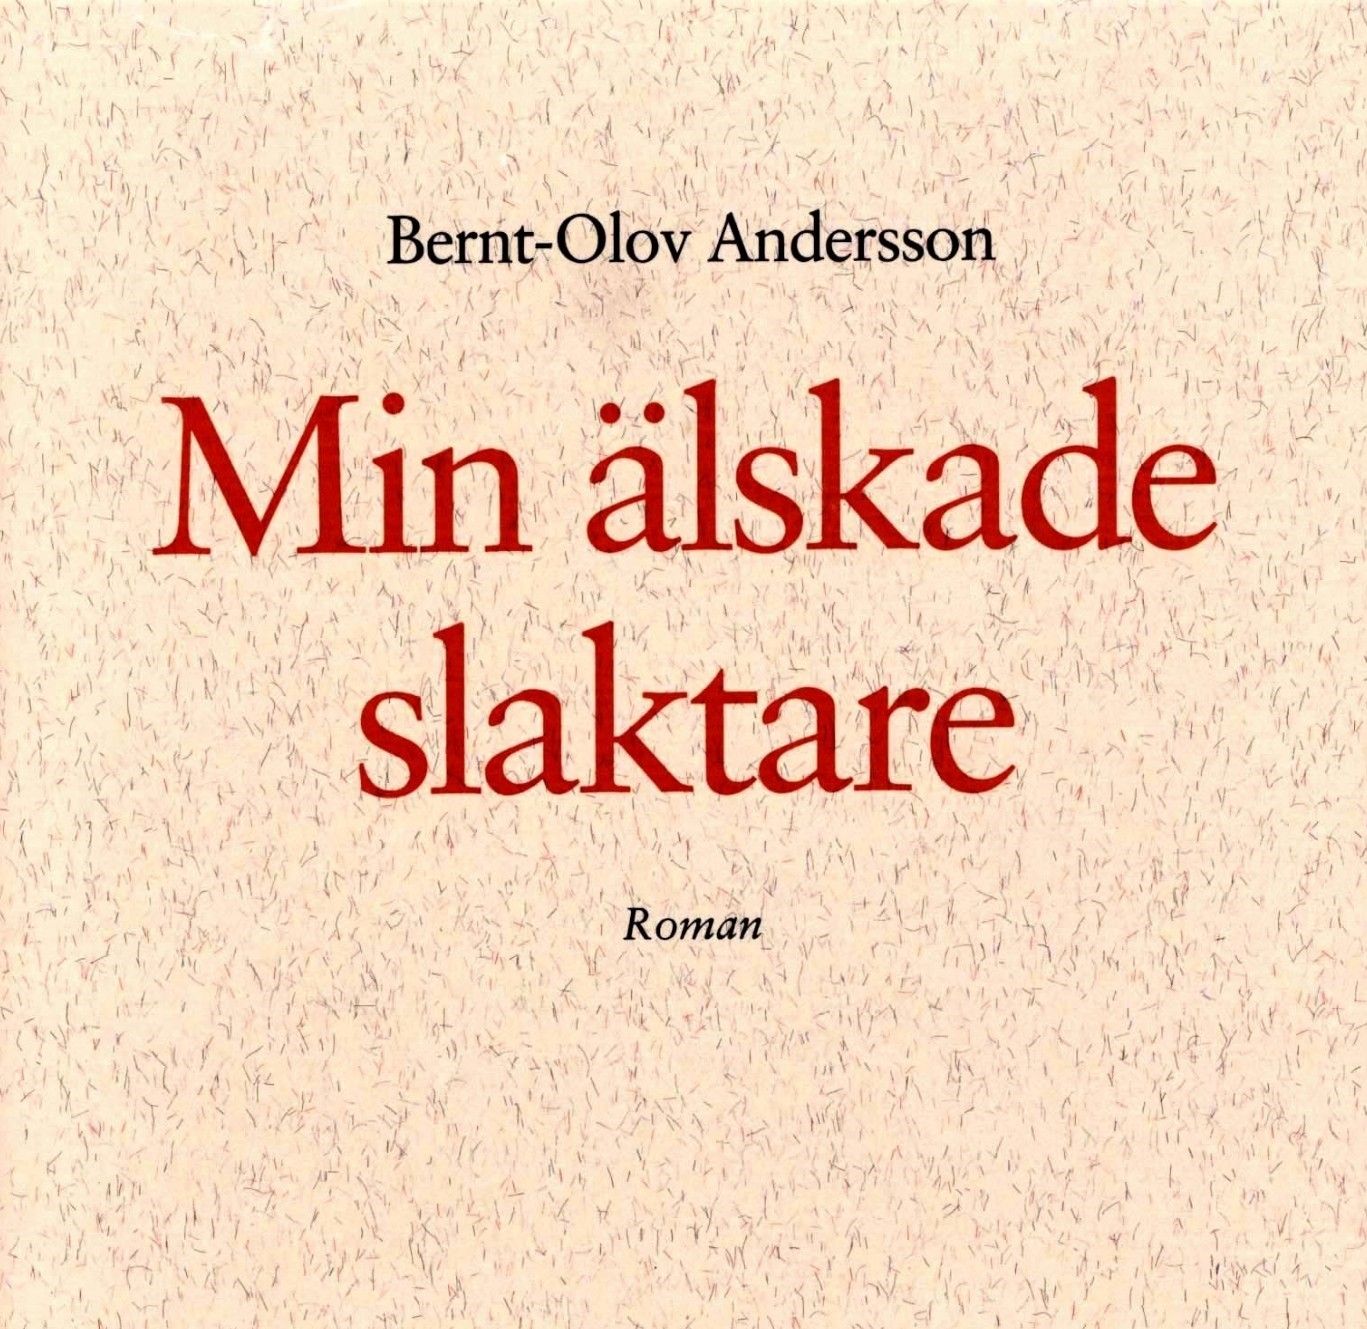 Min älskade slaktare, audiobook by Bernt-Olov Andersson